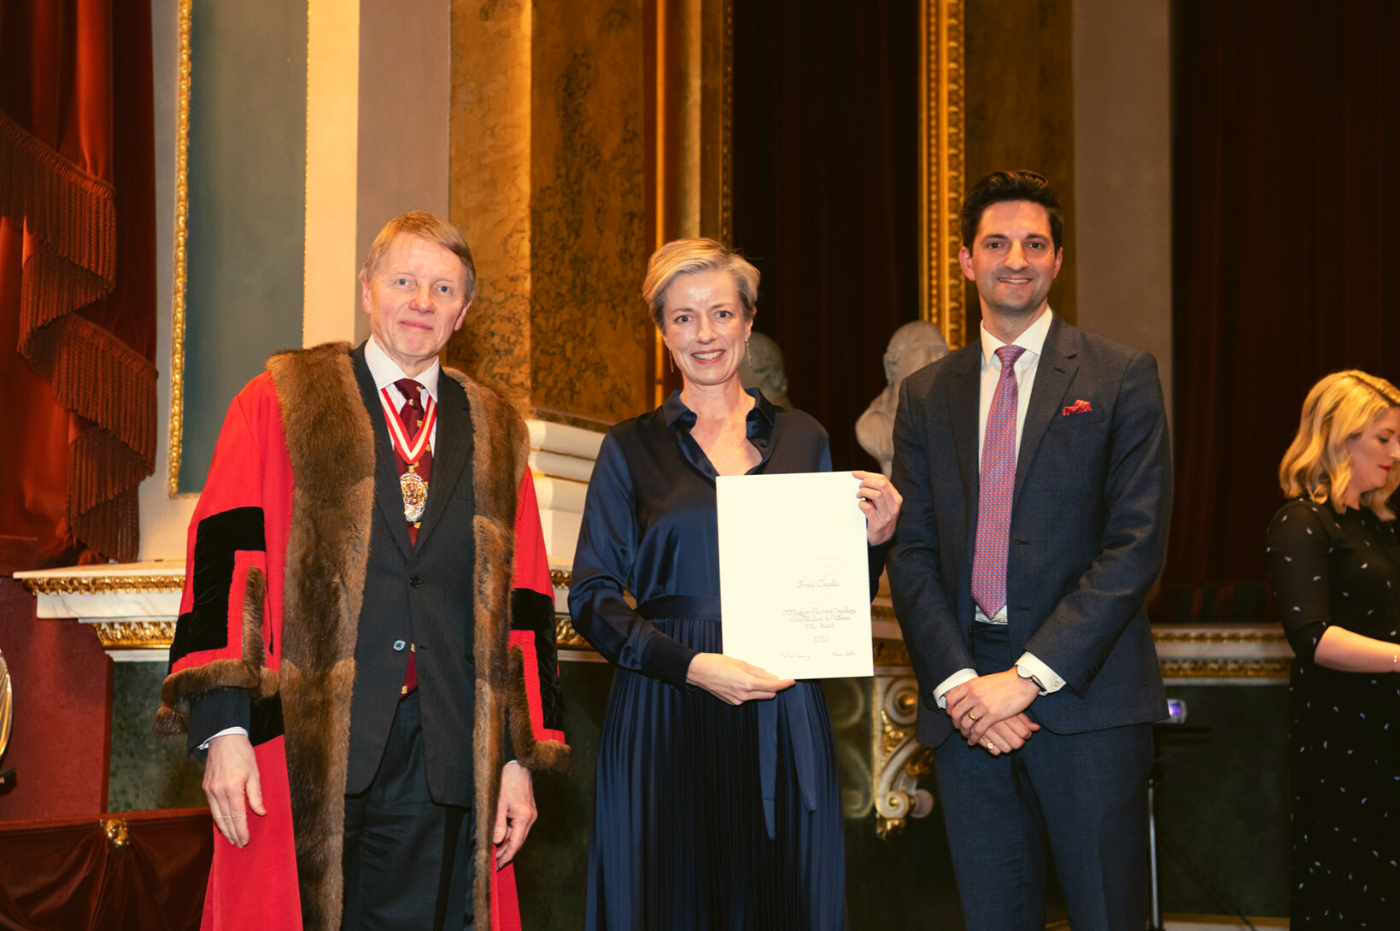 Sonia Cheadle Wins This Year’s IJL Award